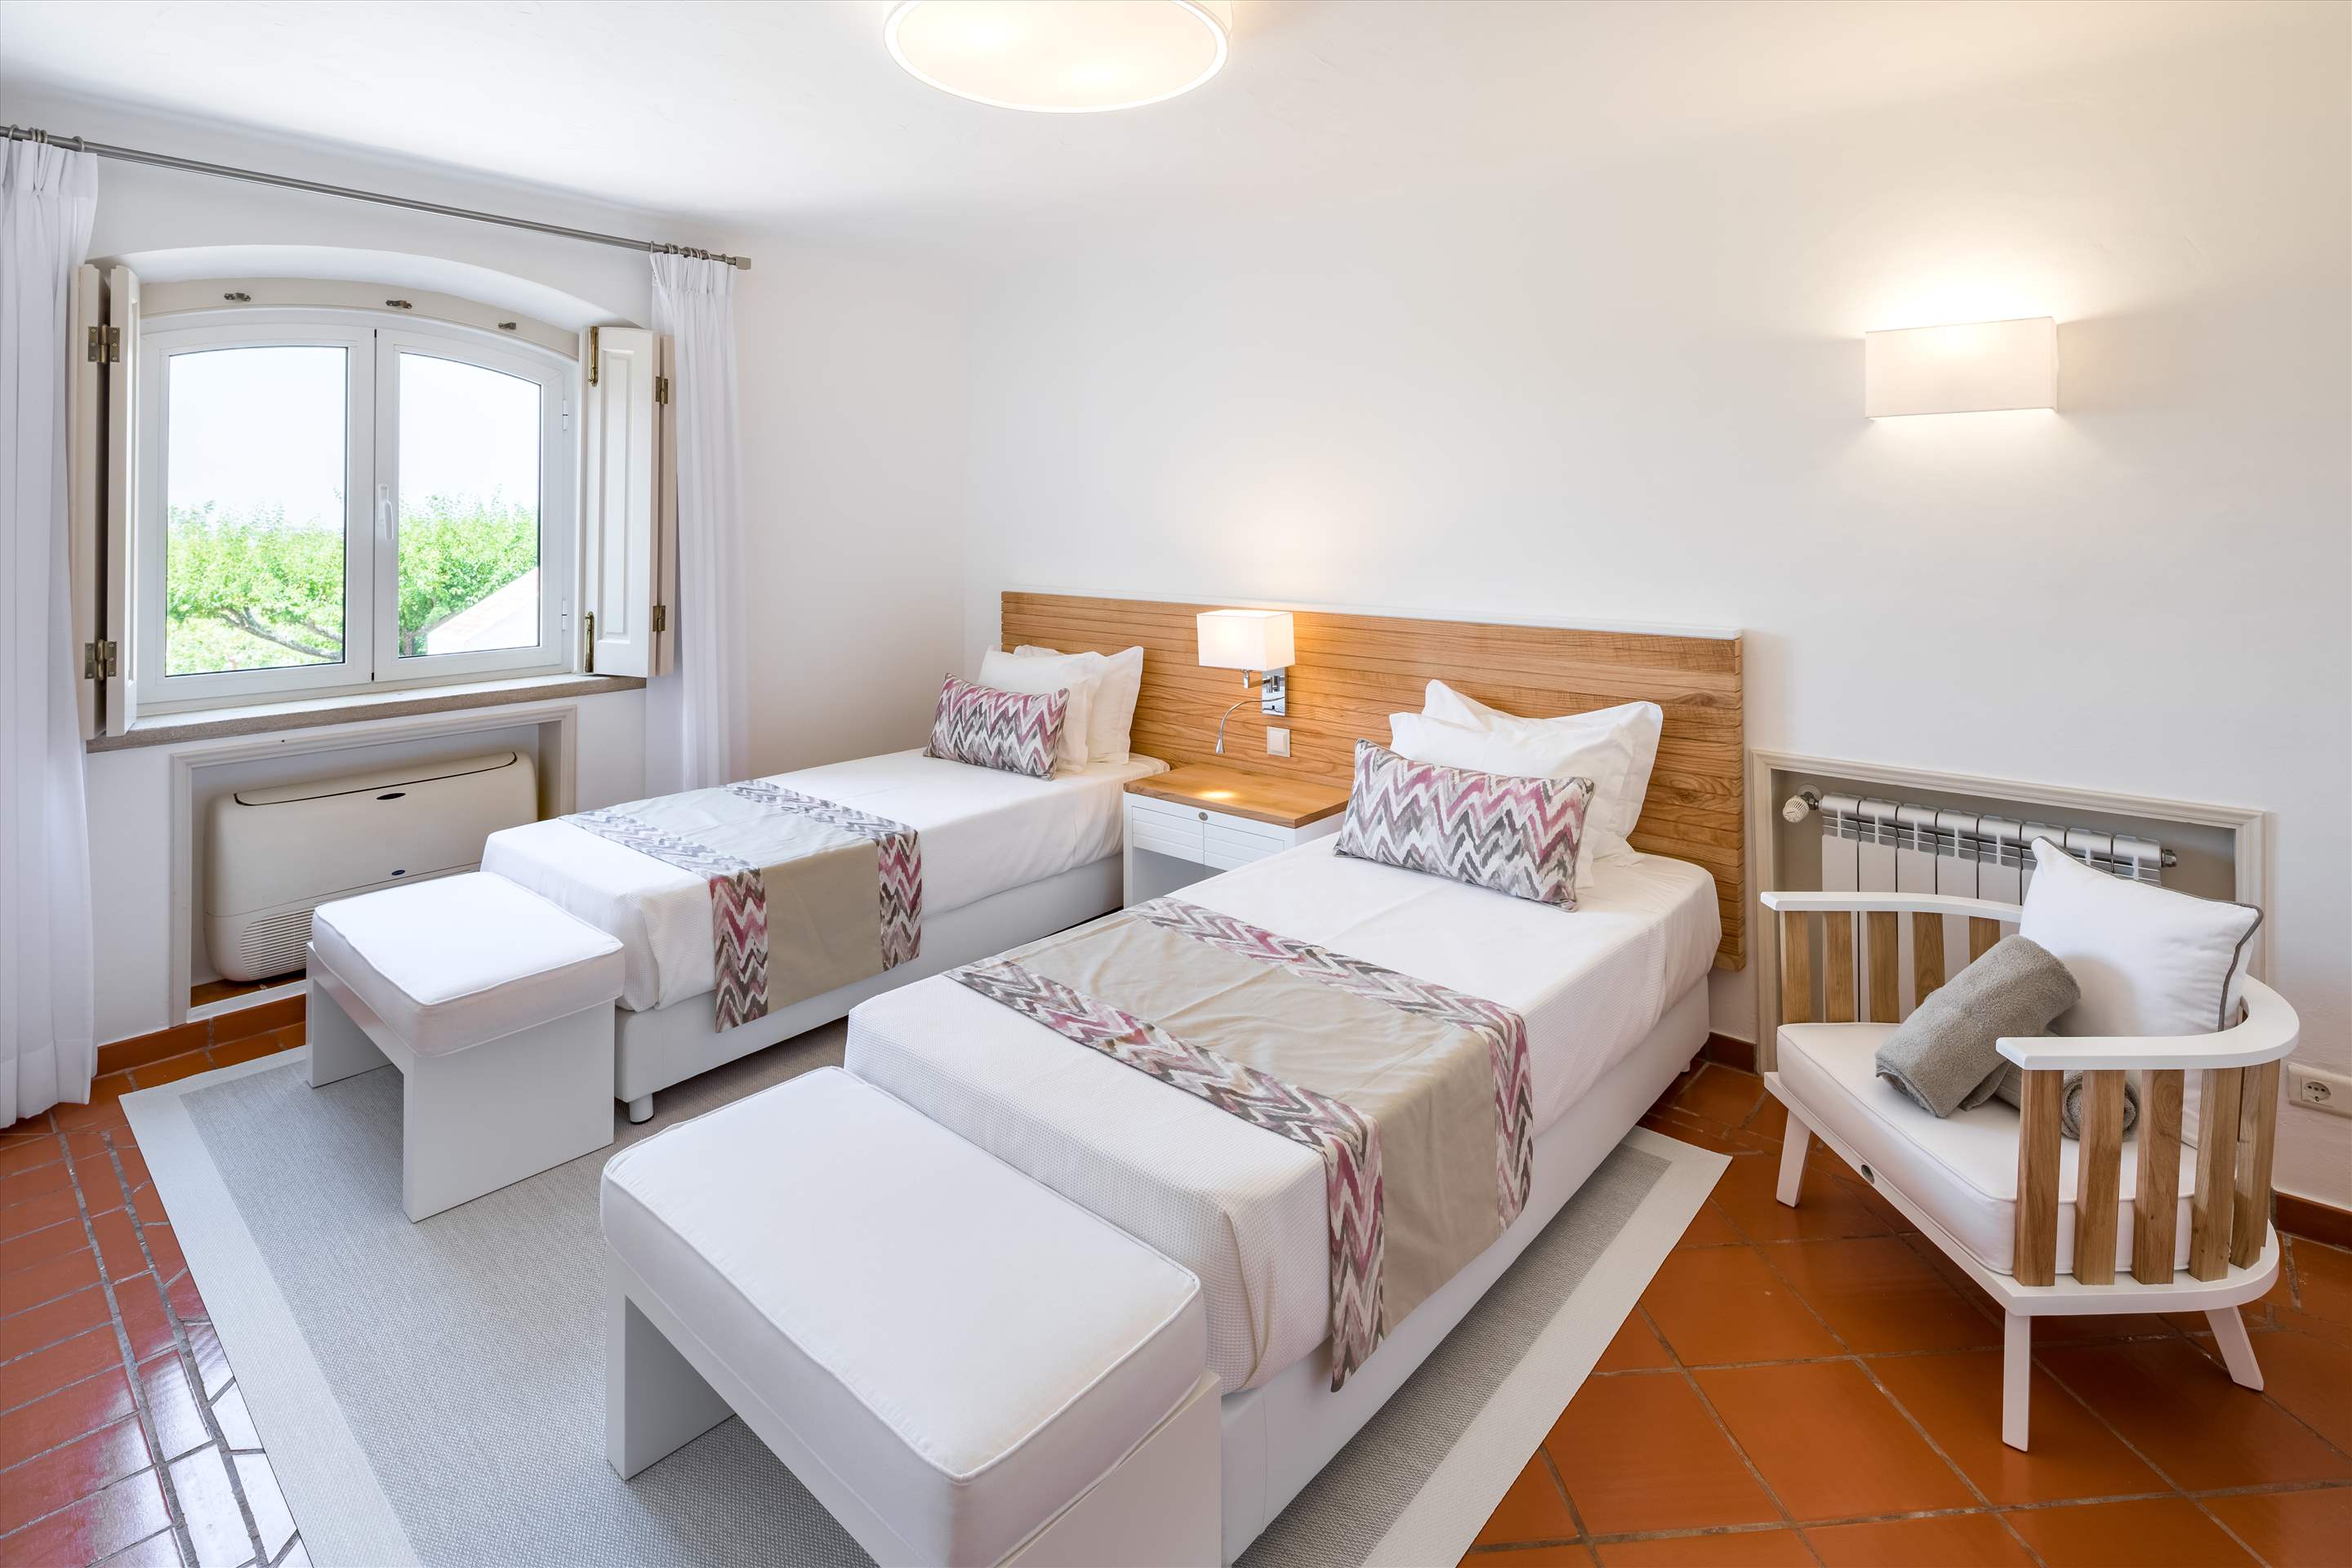 Casa da Montanha, 13-14 persons, 8 bedroom villa in Vilamoura Area, Algarve Photo #29